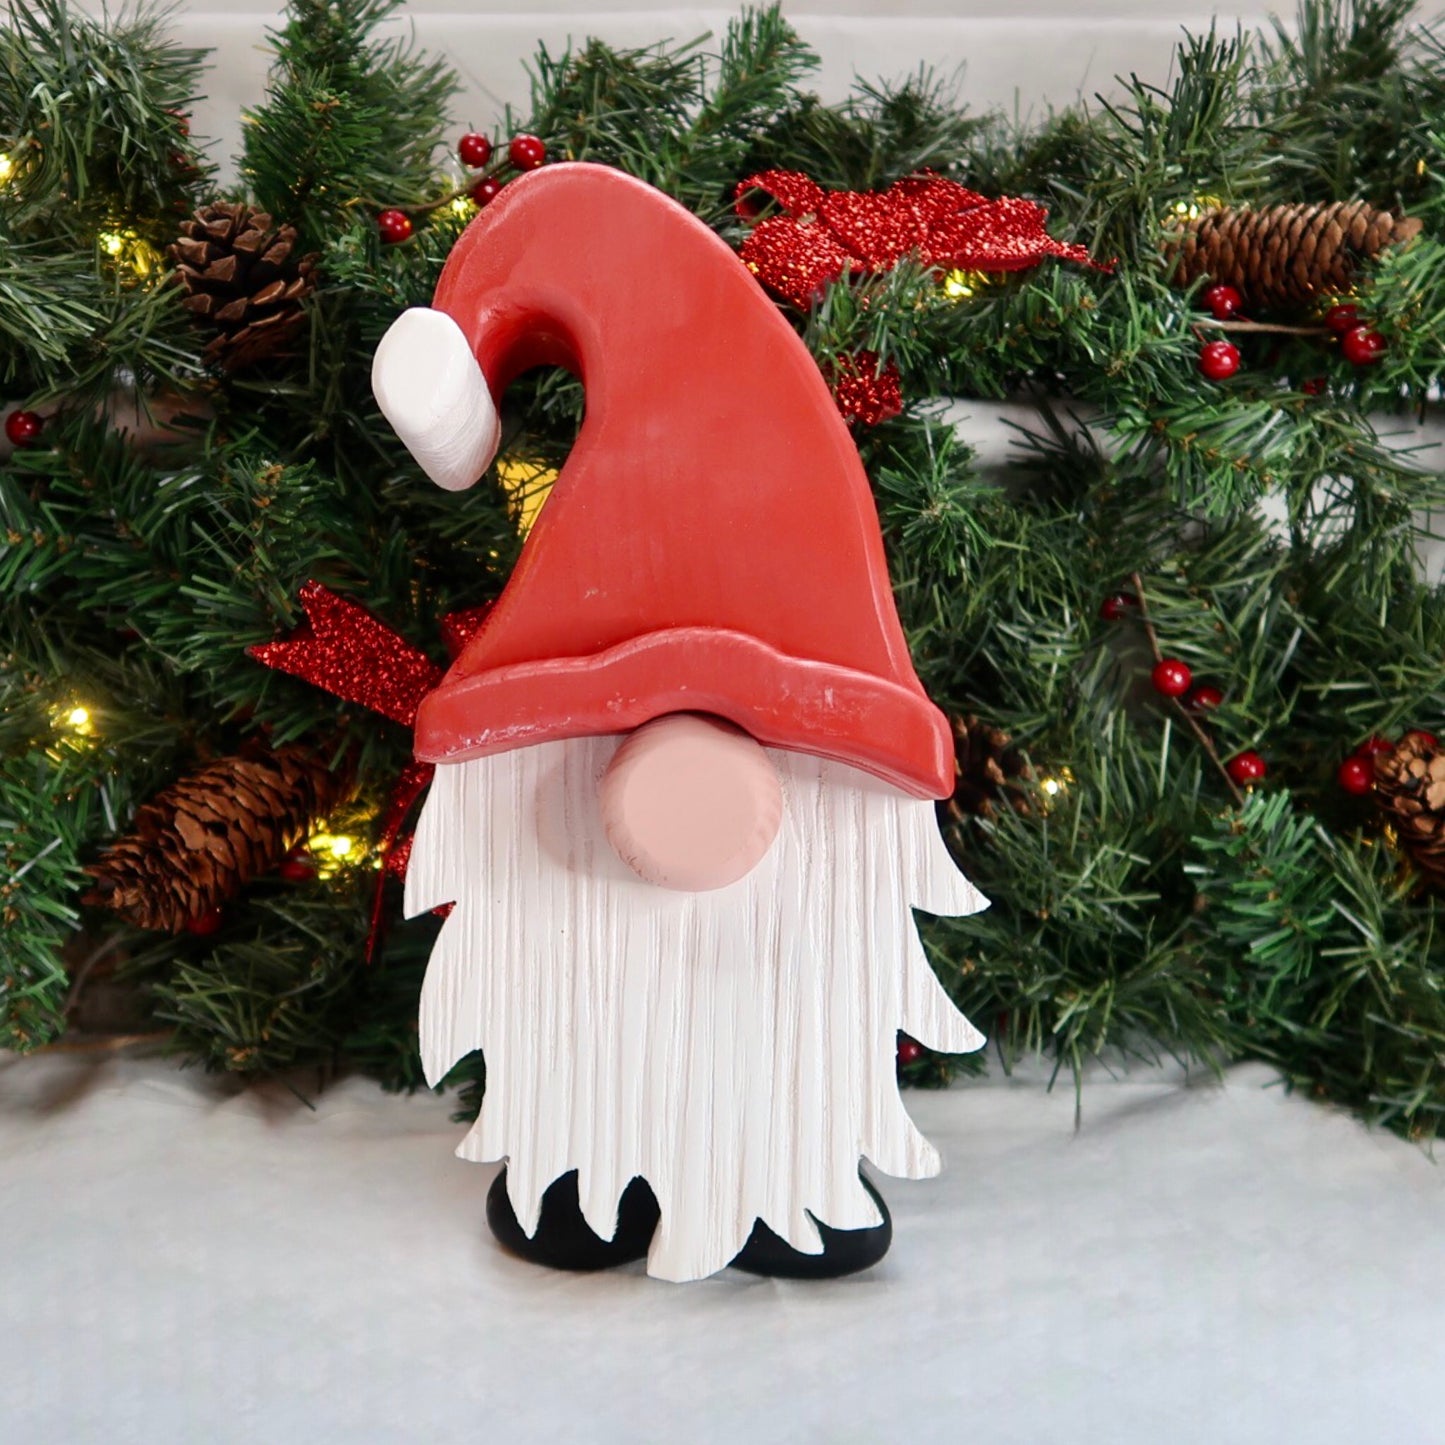 Festive Gonk - Handmade Decorative Wooden Gnome - Red